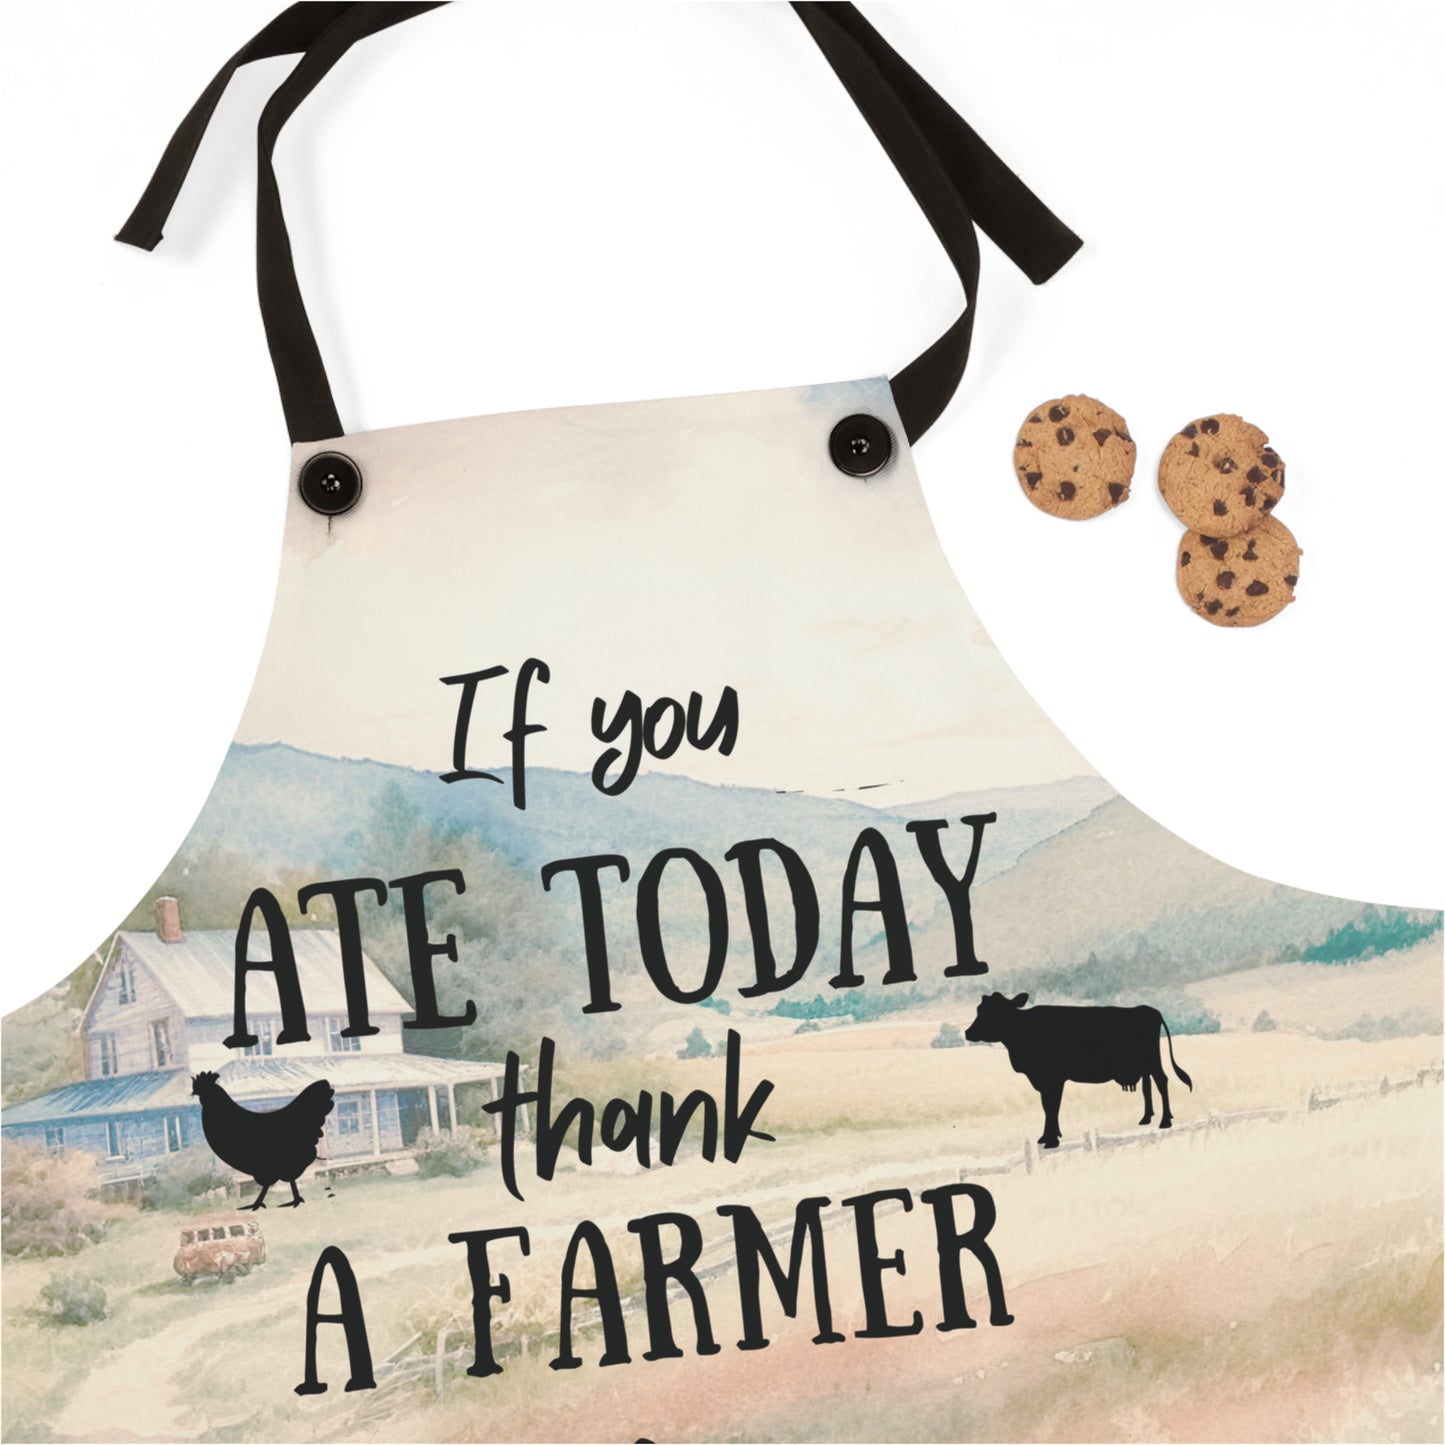 Thank a farmer apron front close up